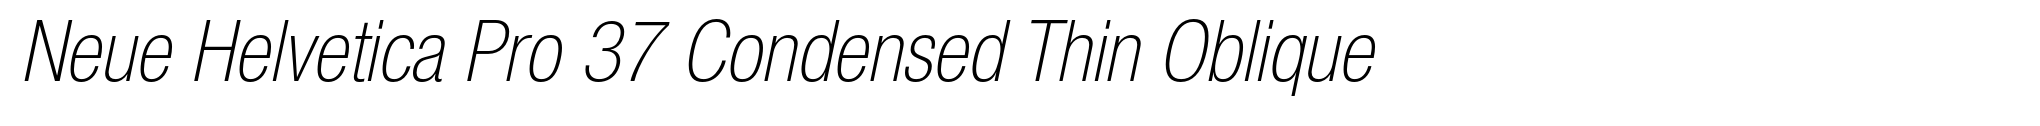 Neue Helvetica Pro 37 Condensed Thin Oblique image